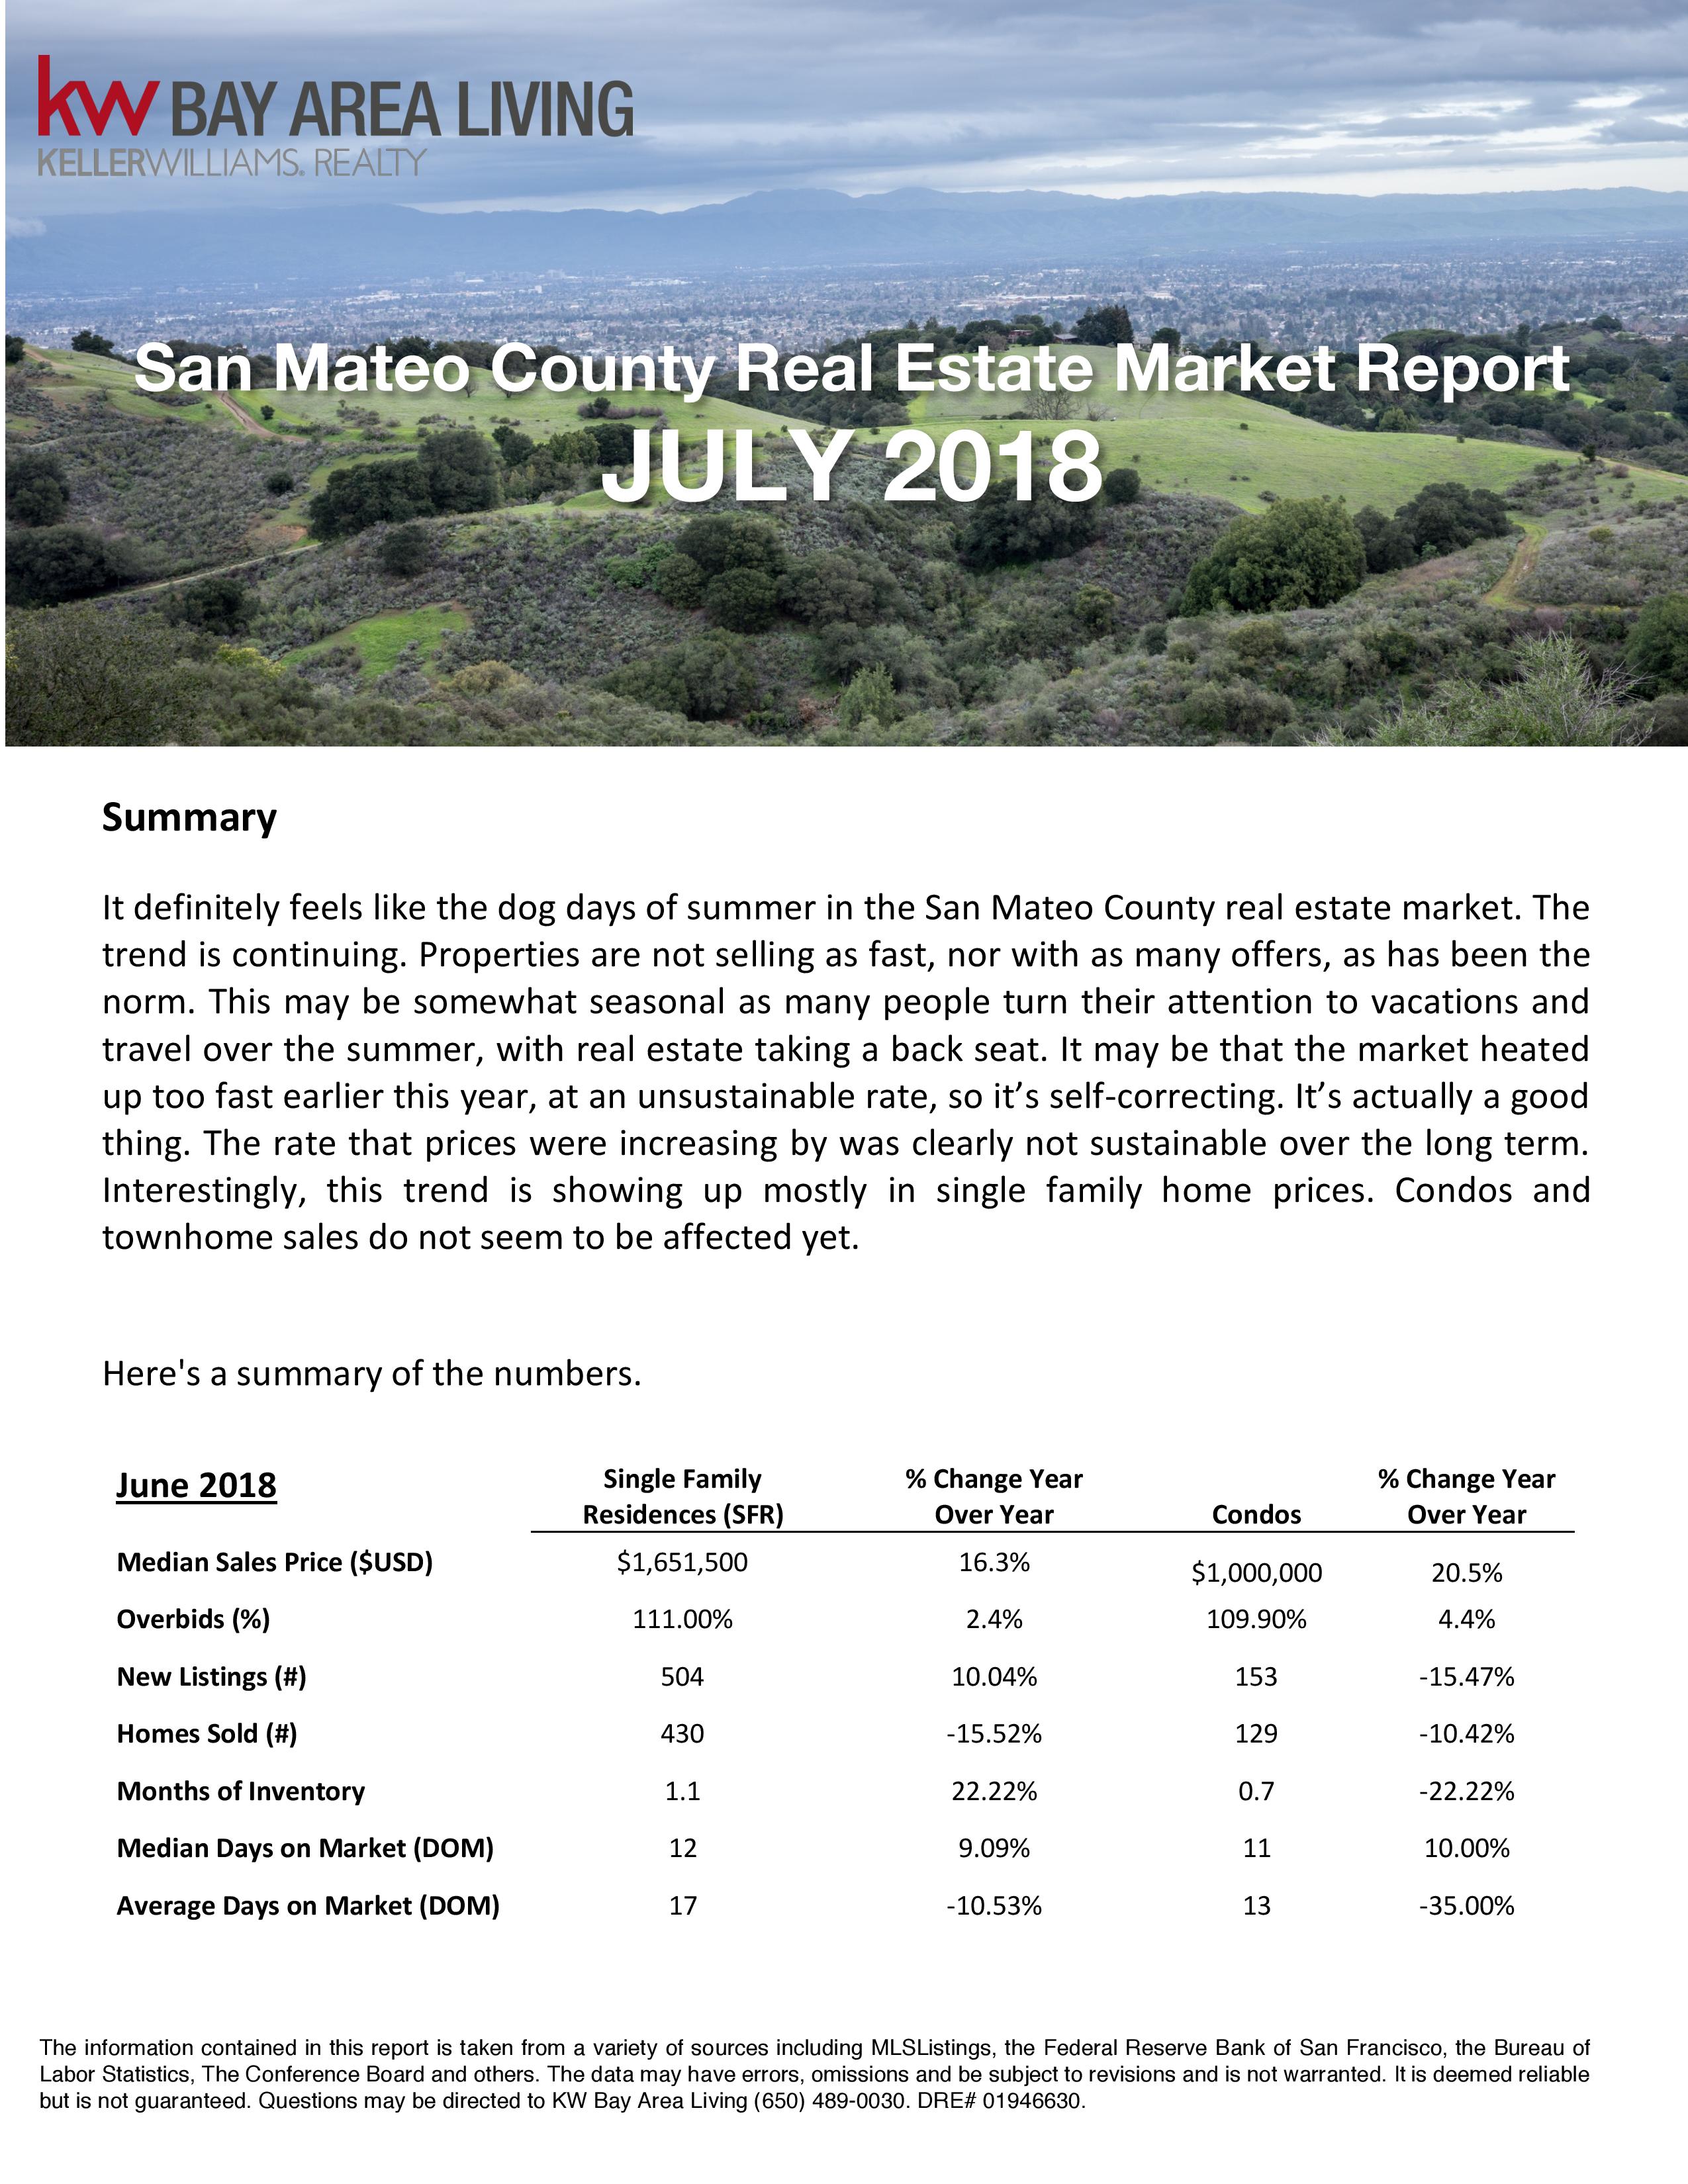 July 2018 Market Report